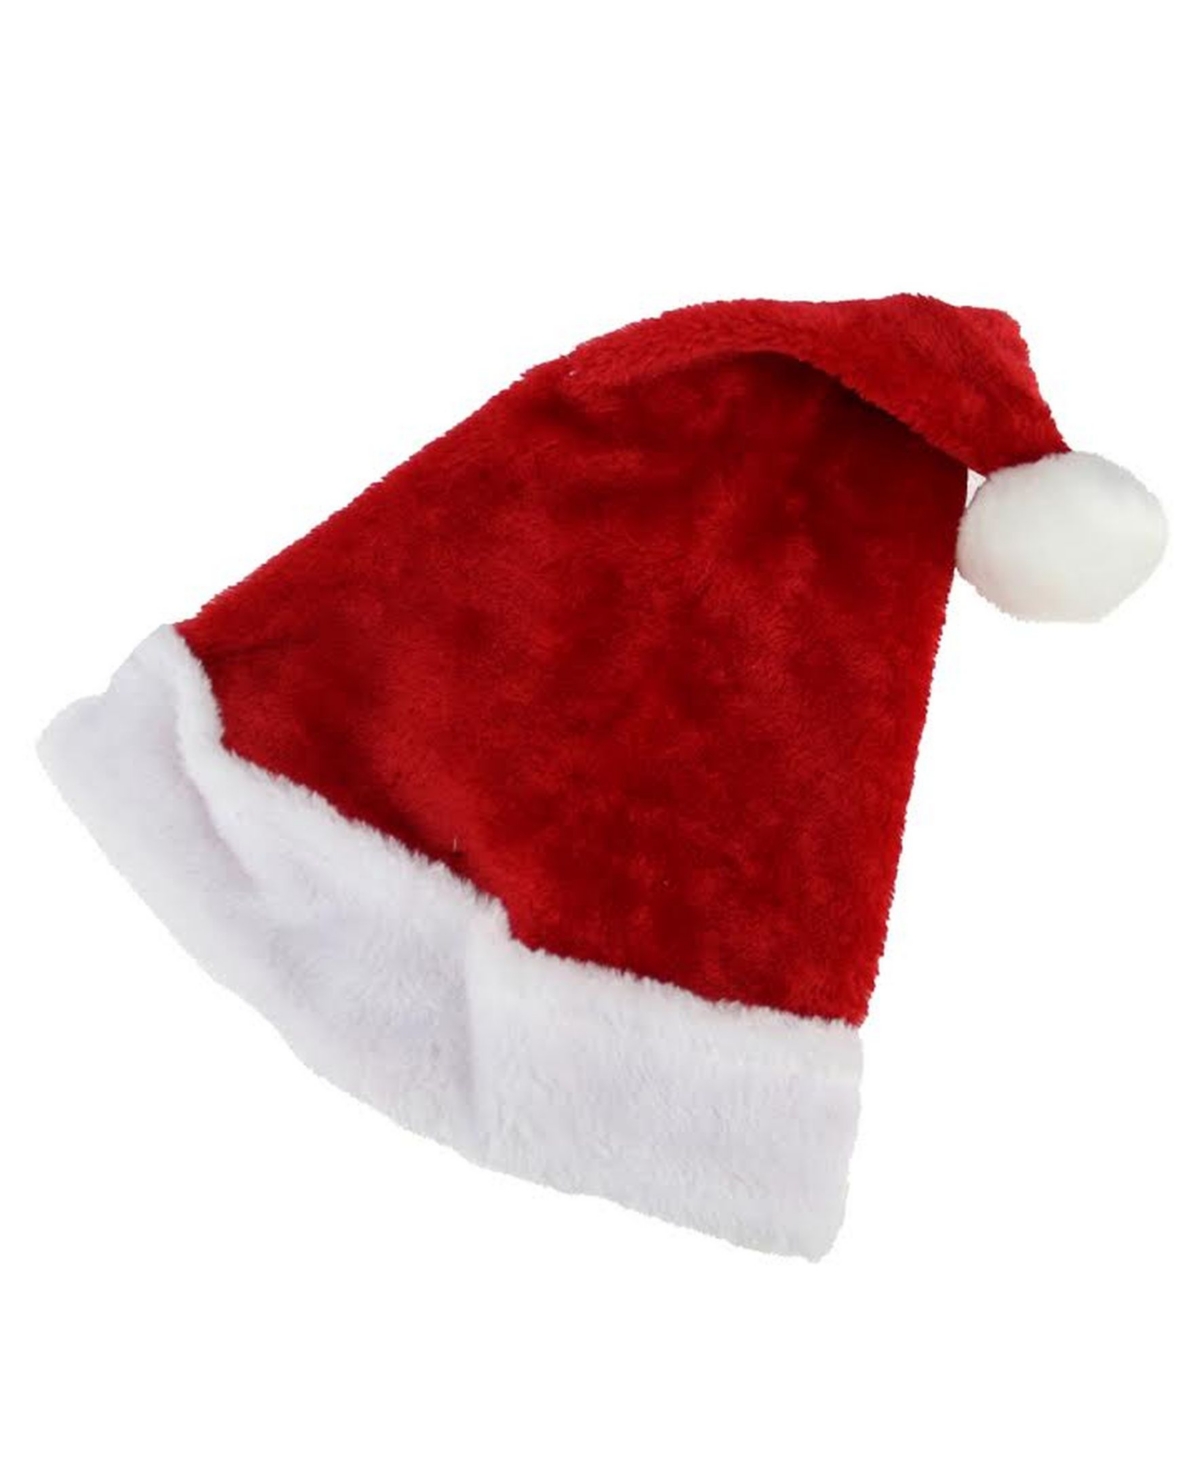 Santa Unisex Adult Christmas Hat Costume Accessory-Medium - Red